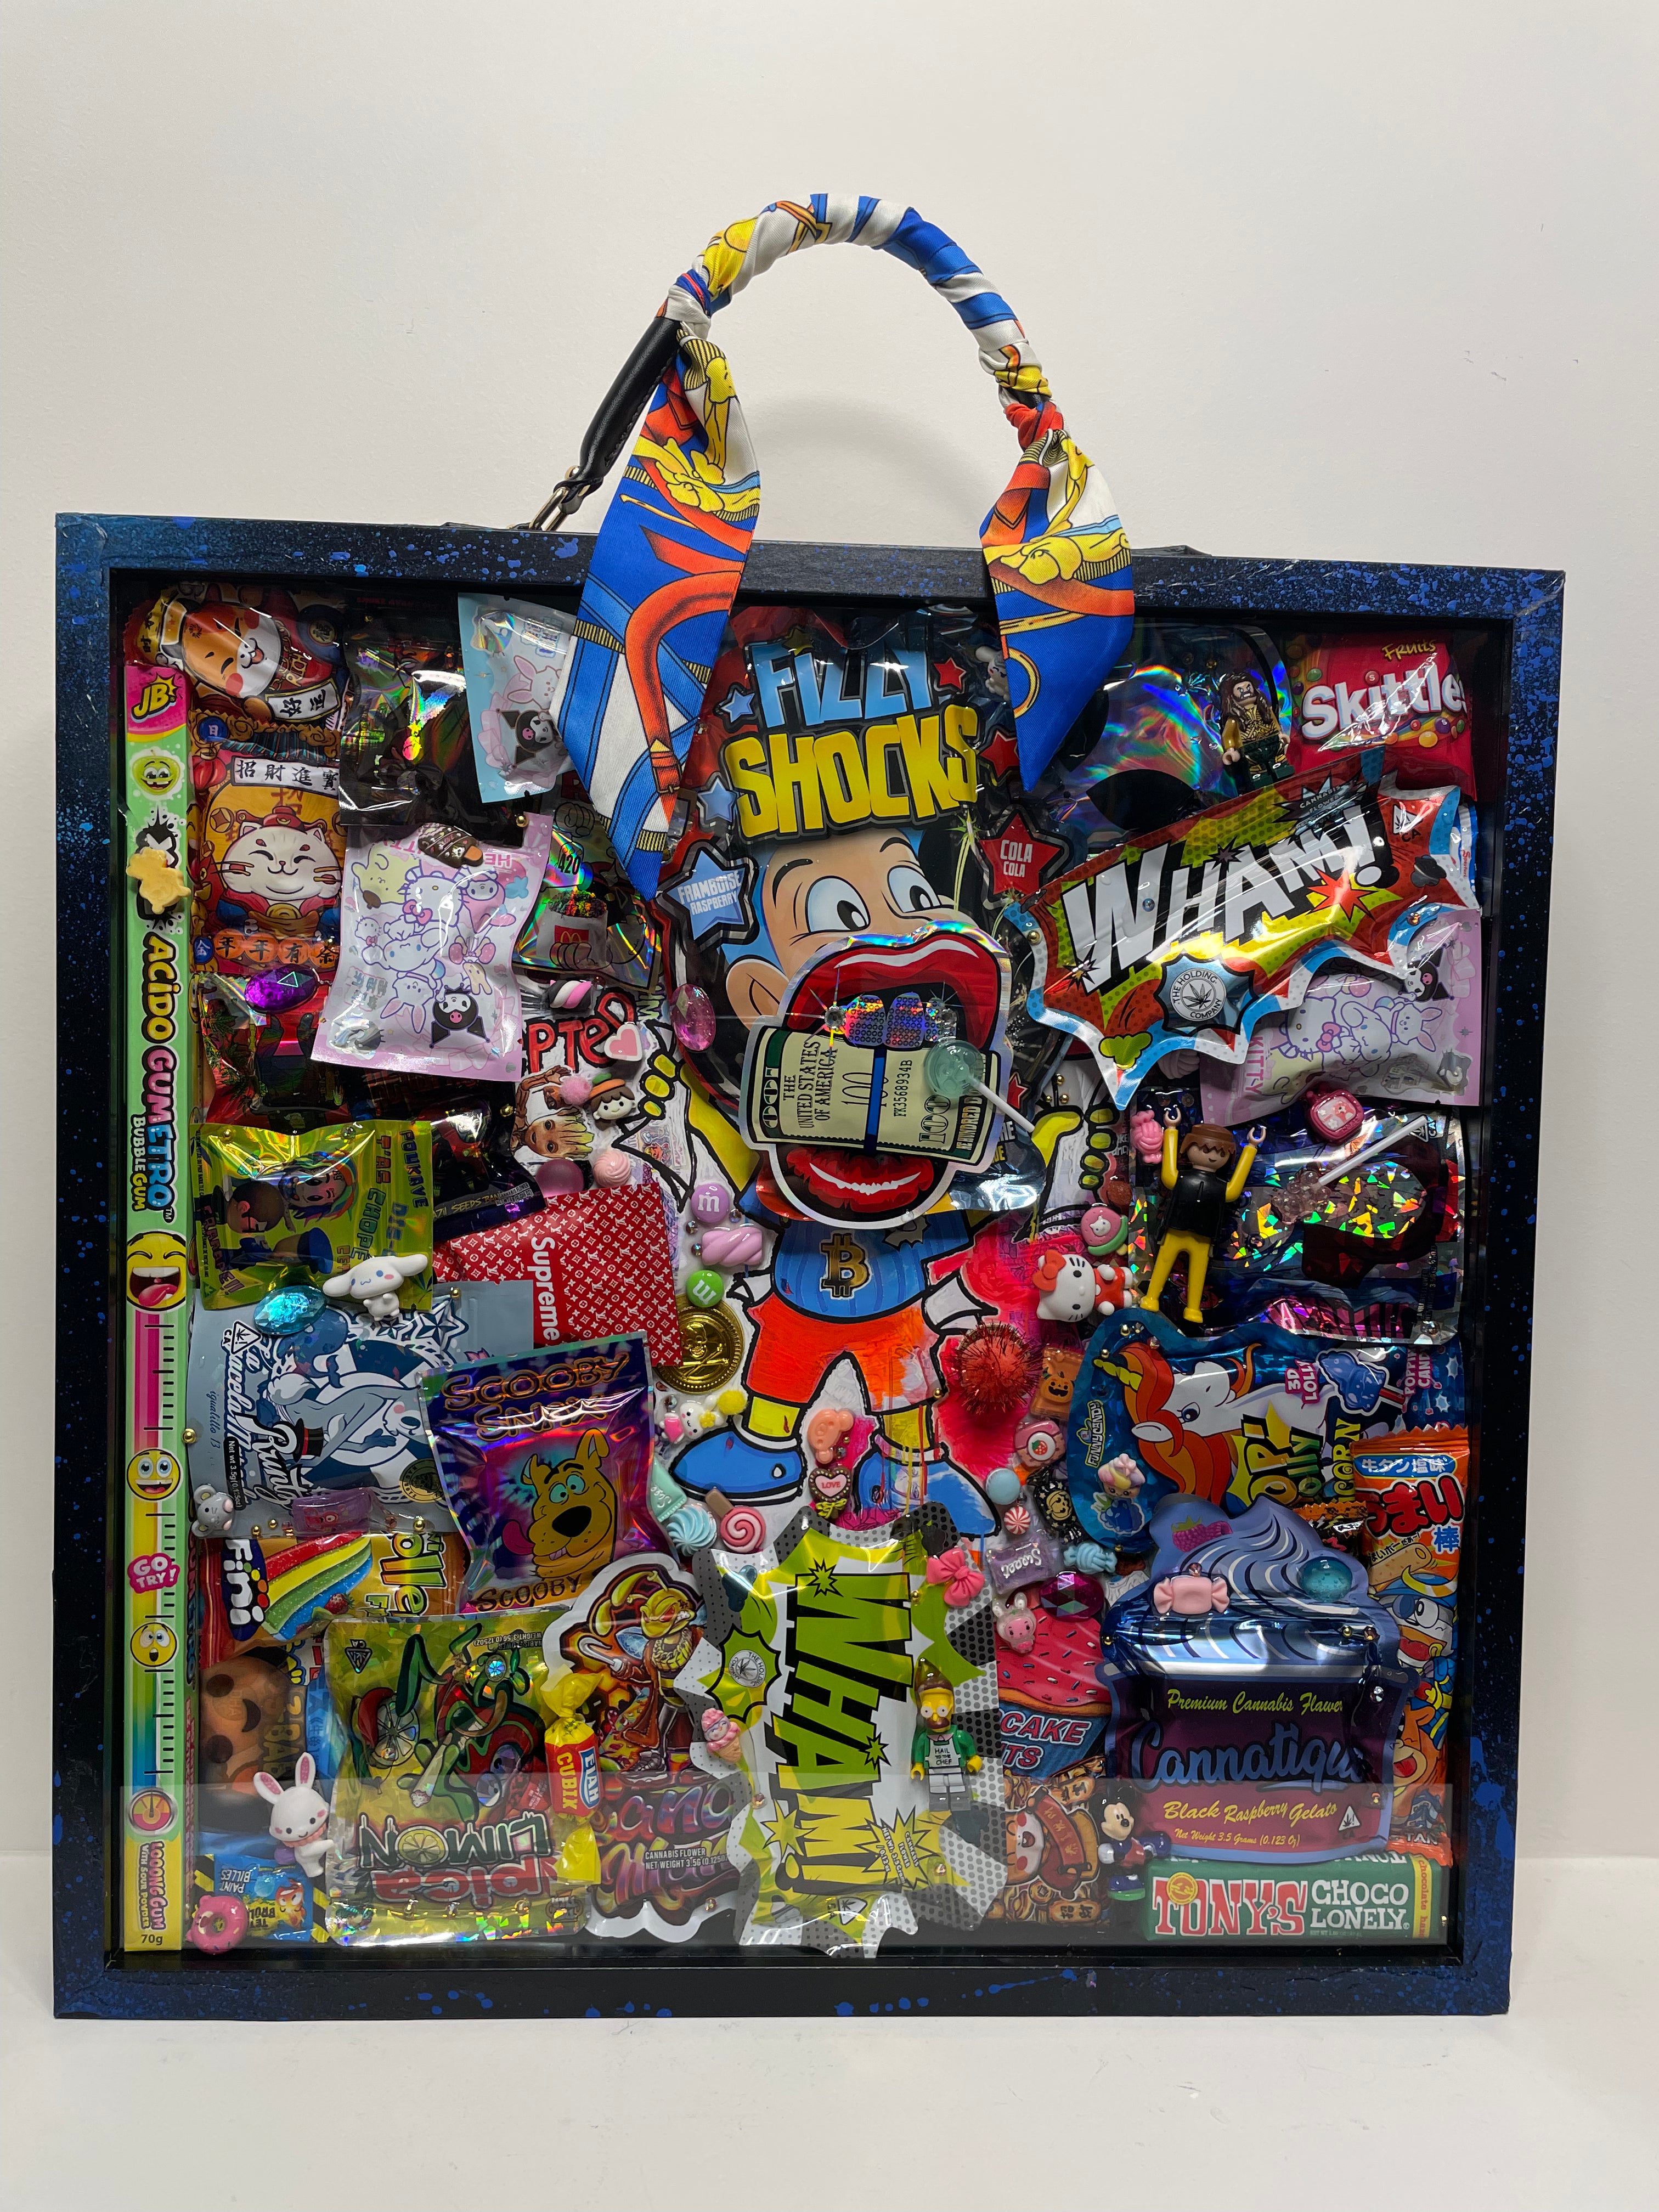 David Cintract Candy Box  "Addict Candy Shocks"